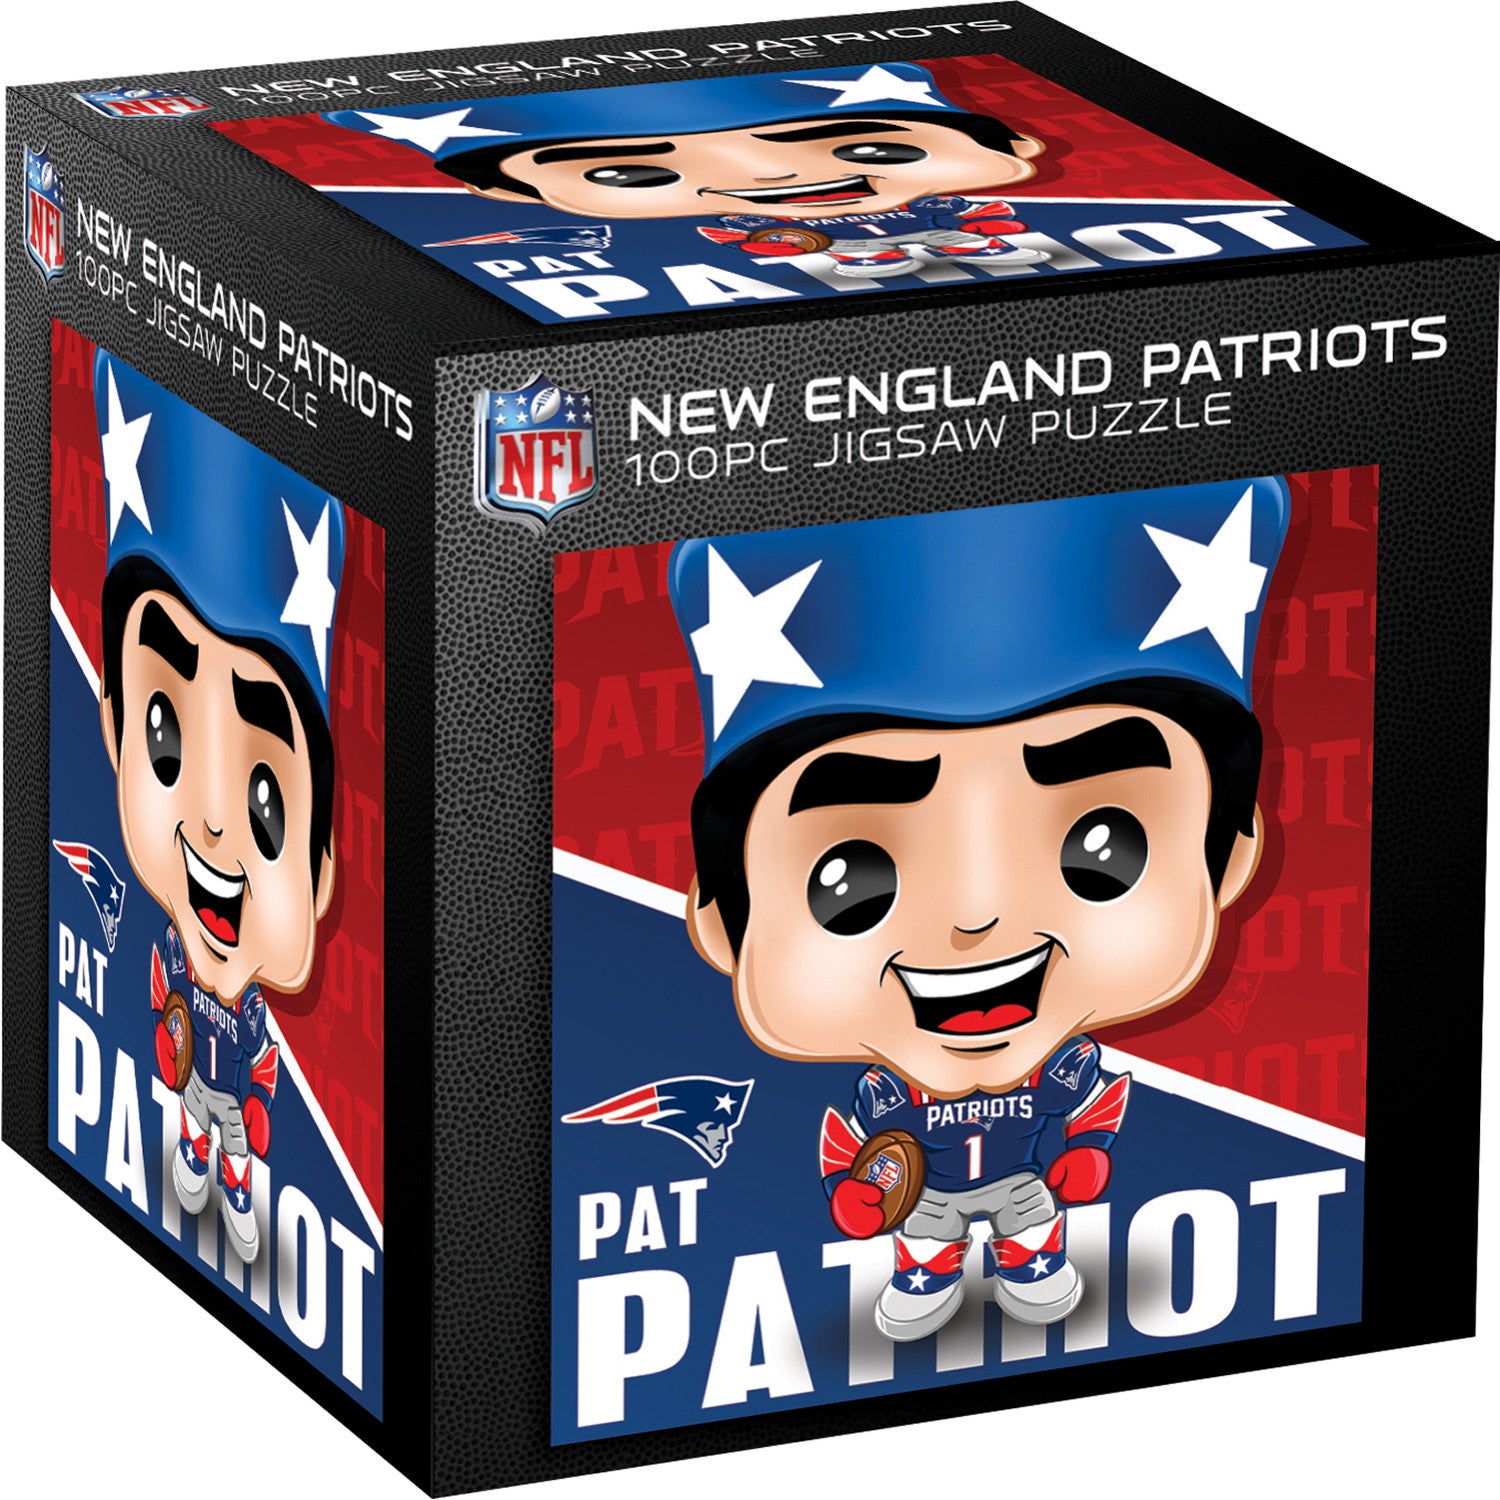 Pat Patriot - New England Patriots Mascot 100 Piece Puzzle